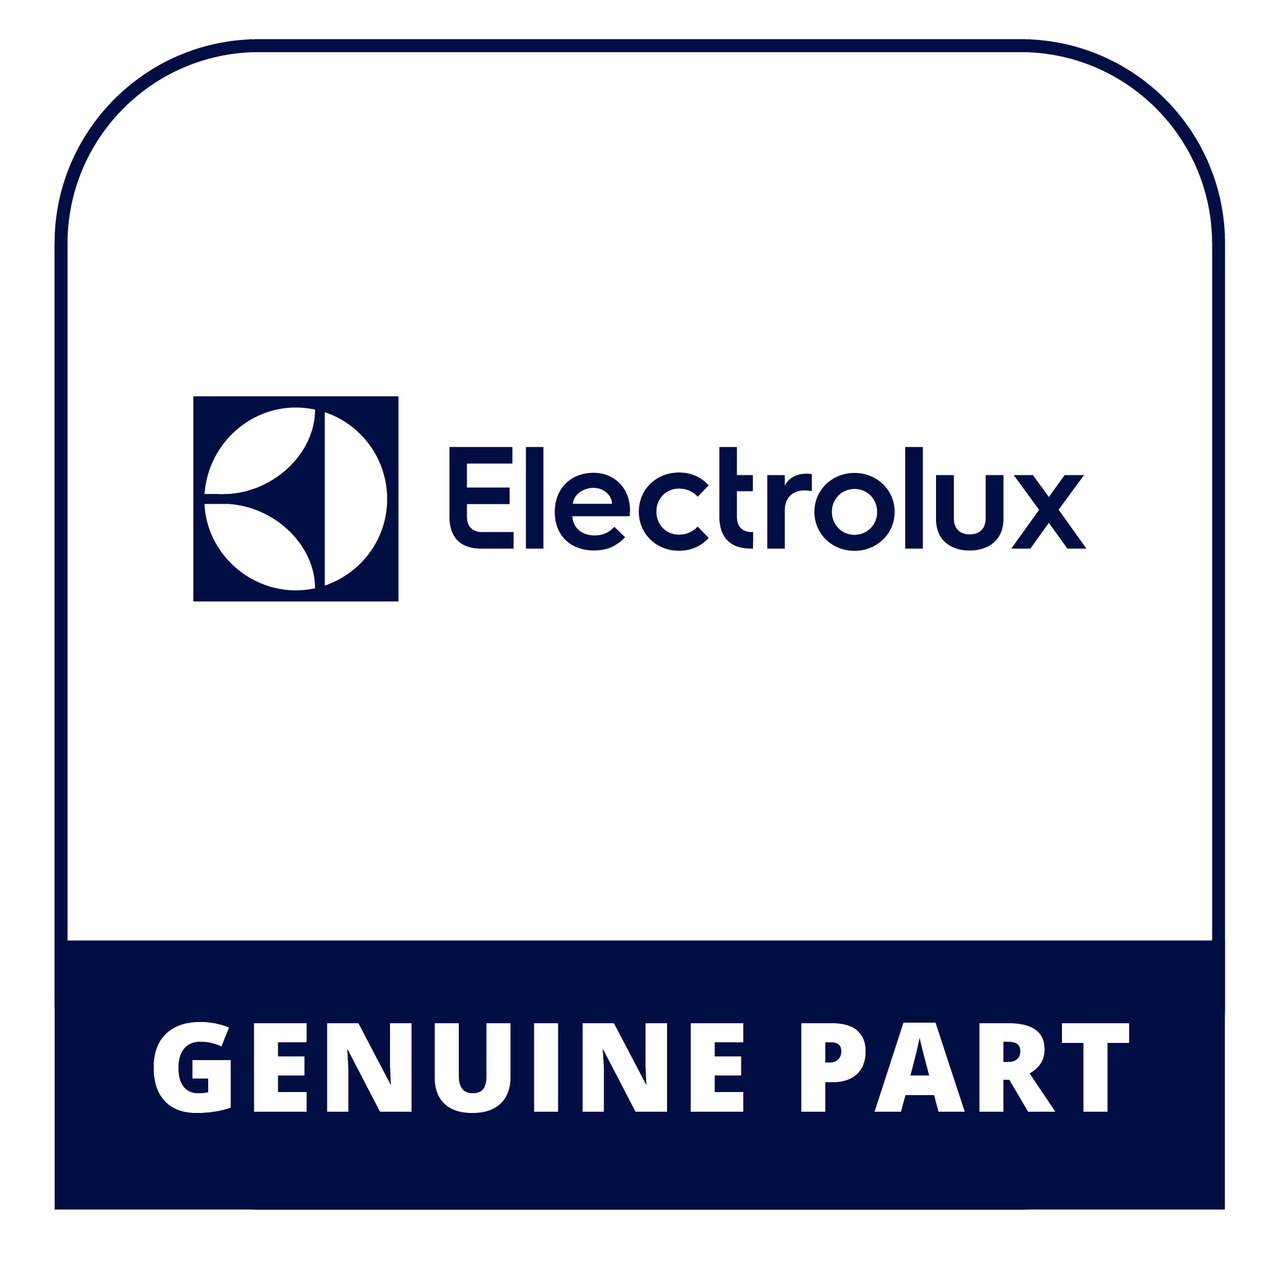 Frigidaire - Electrolux 216703000 Lock - Genuine Electrolux Part